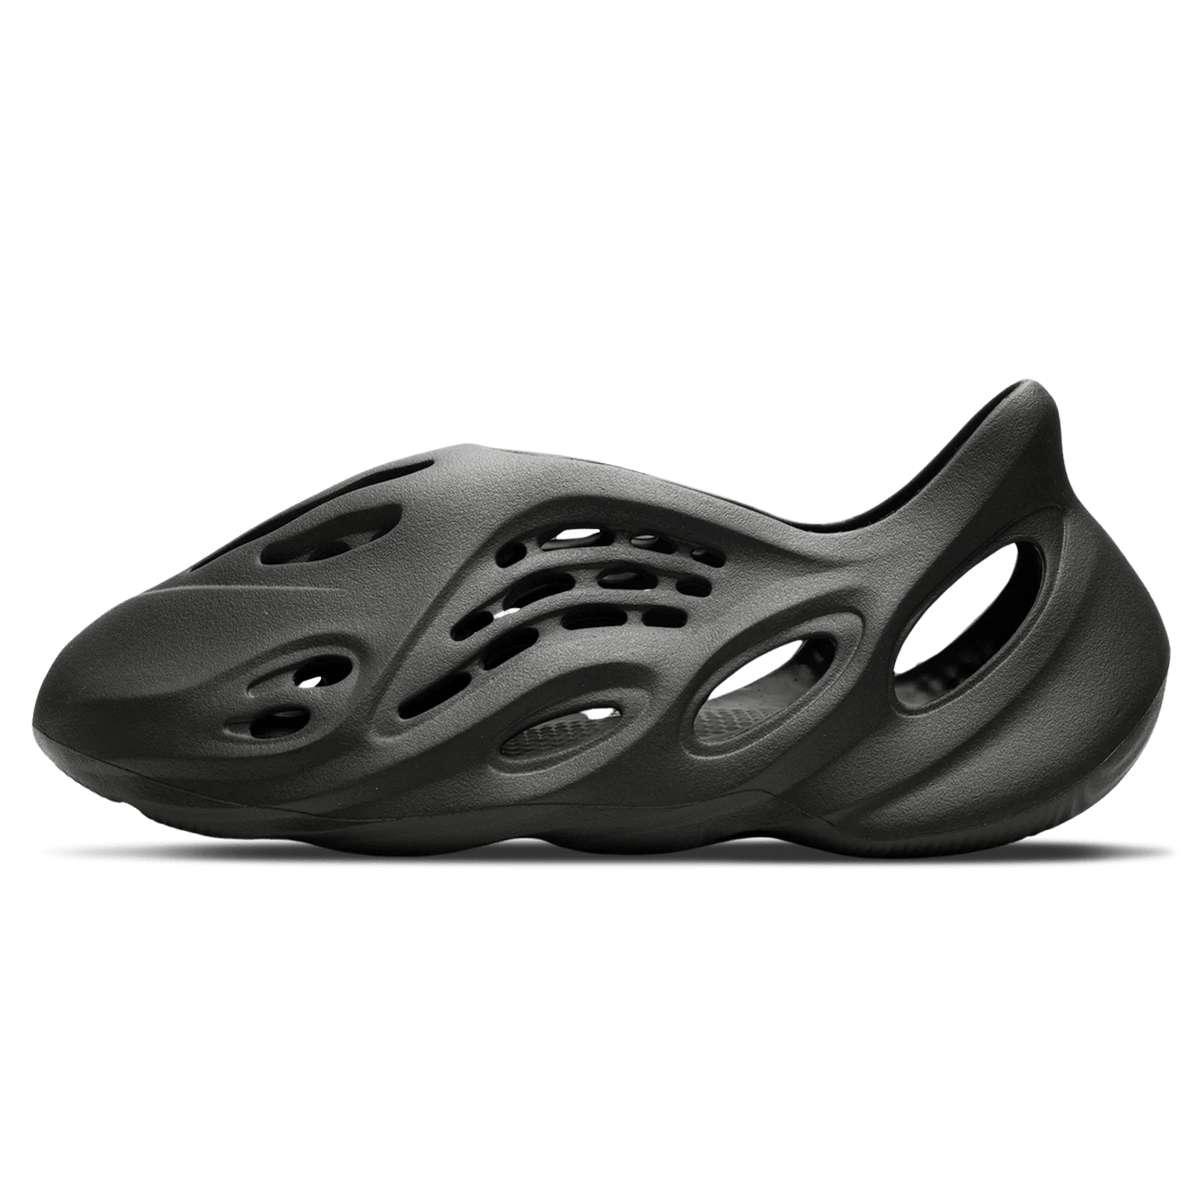 adidas Yeezy Foam Runner 'Carbon' - UrlfreezeShops